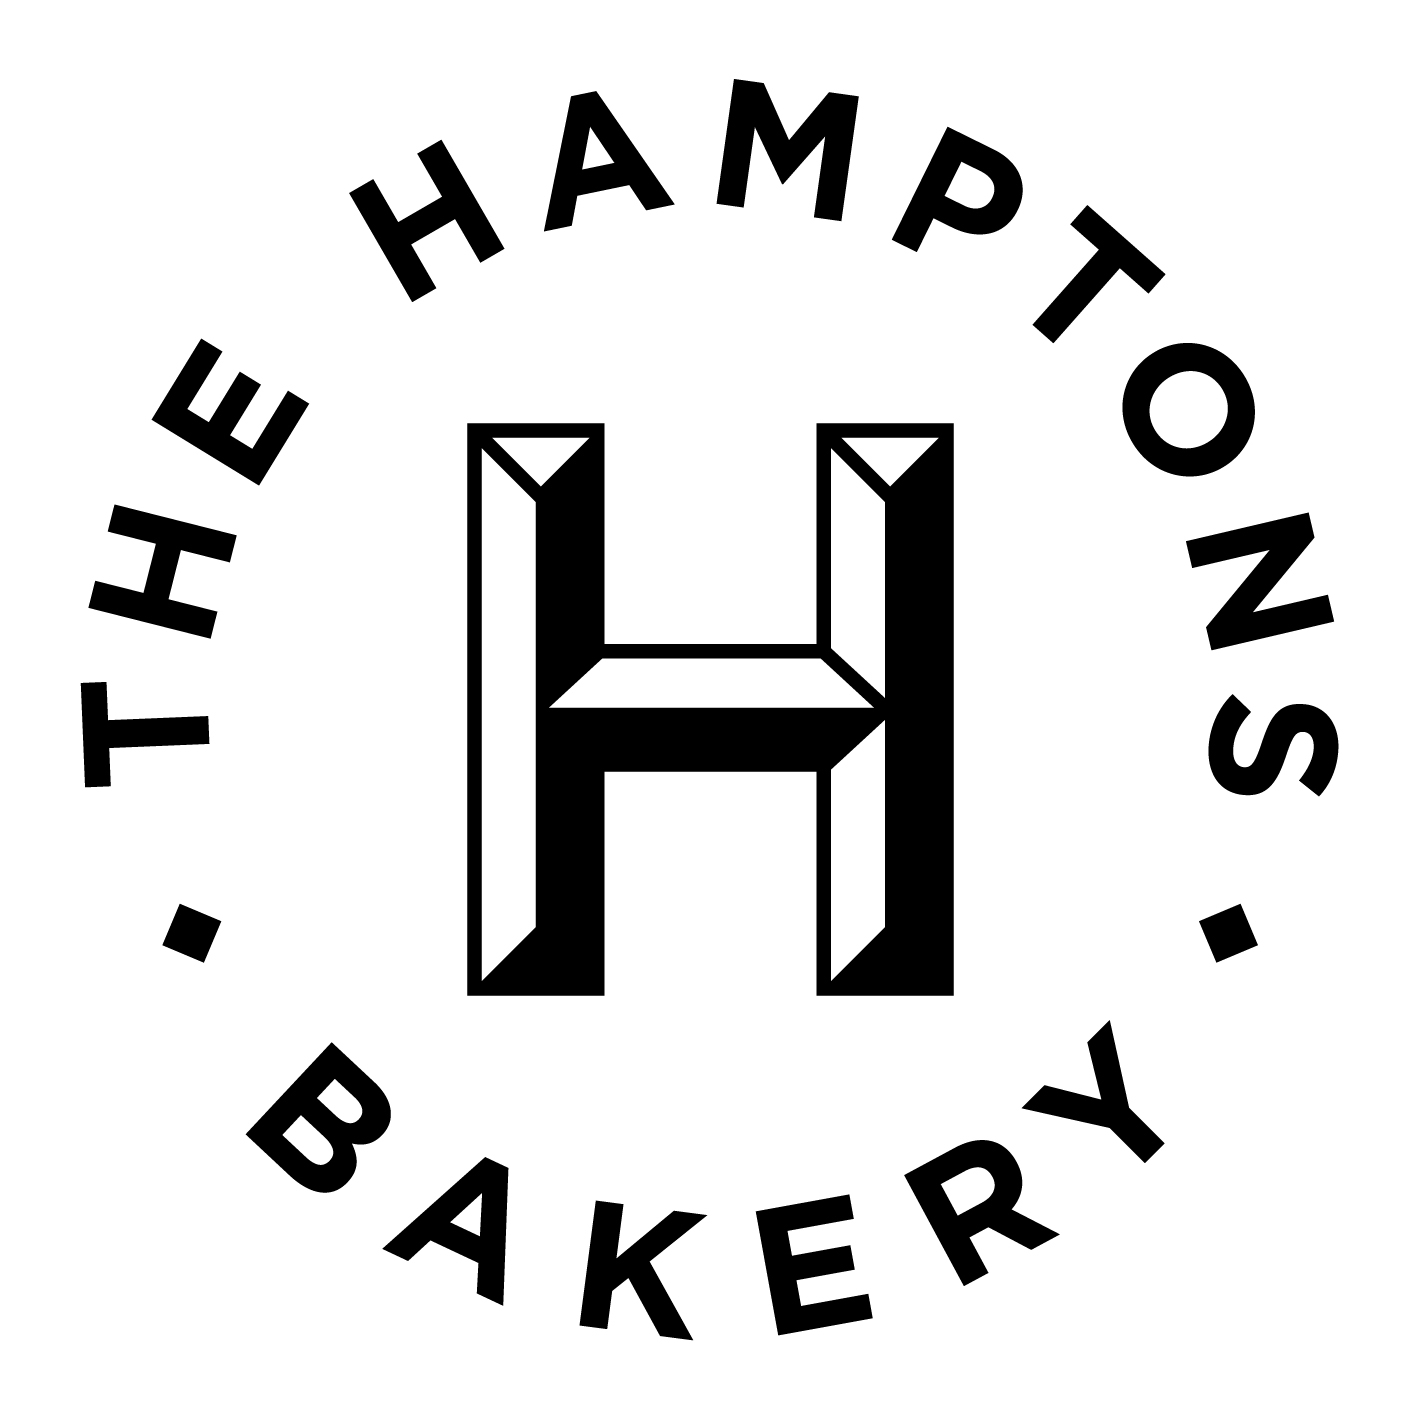 The Hamptons Bakery